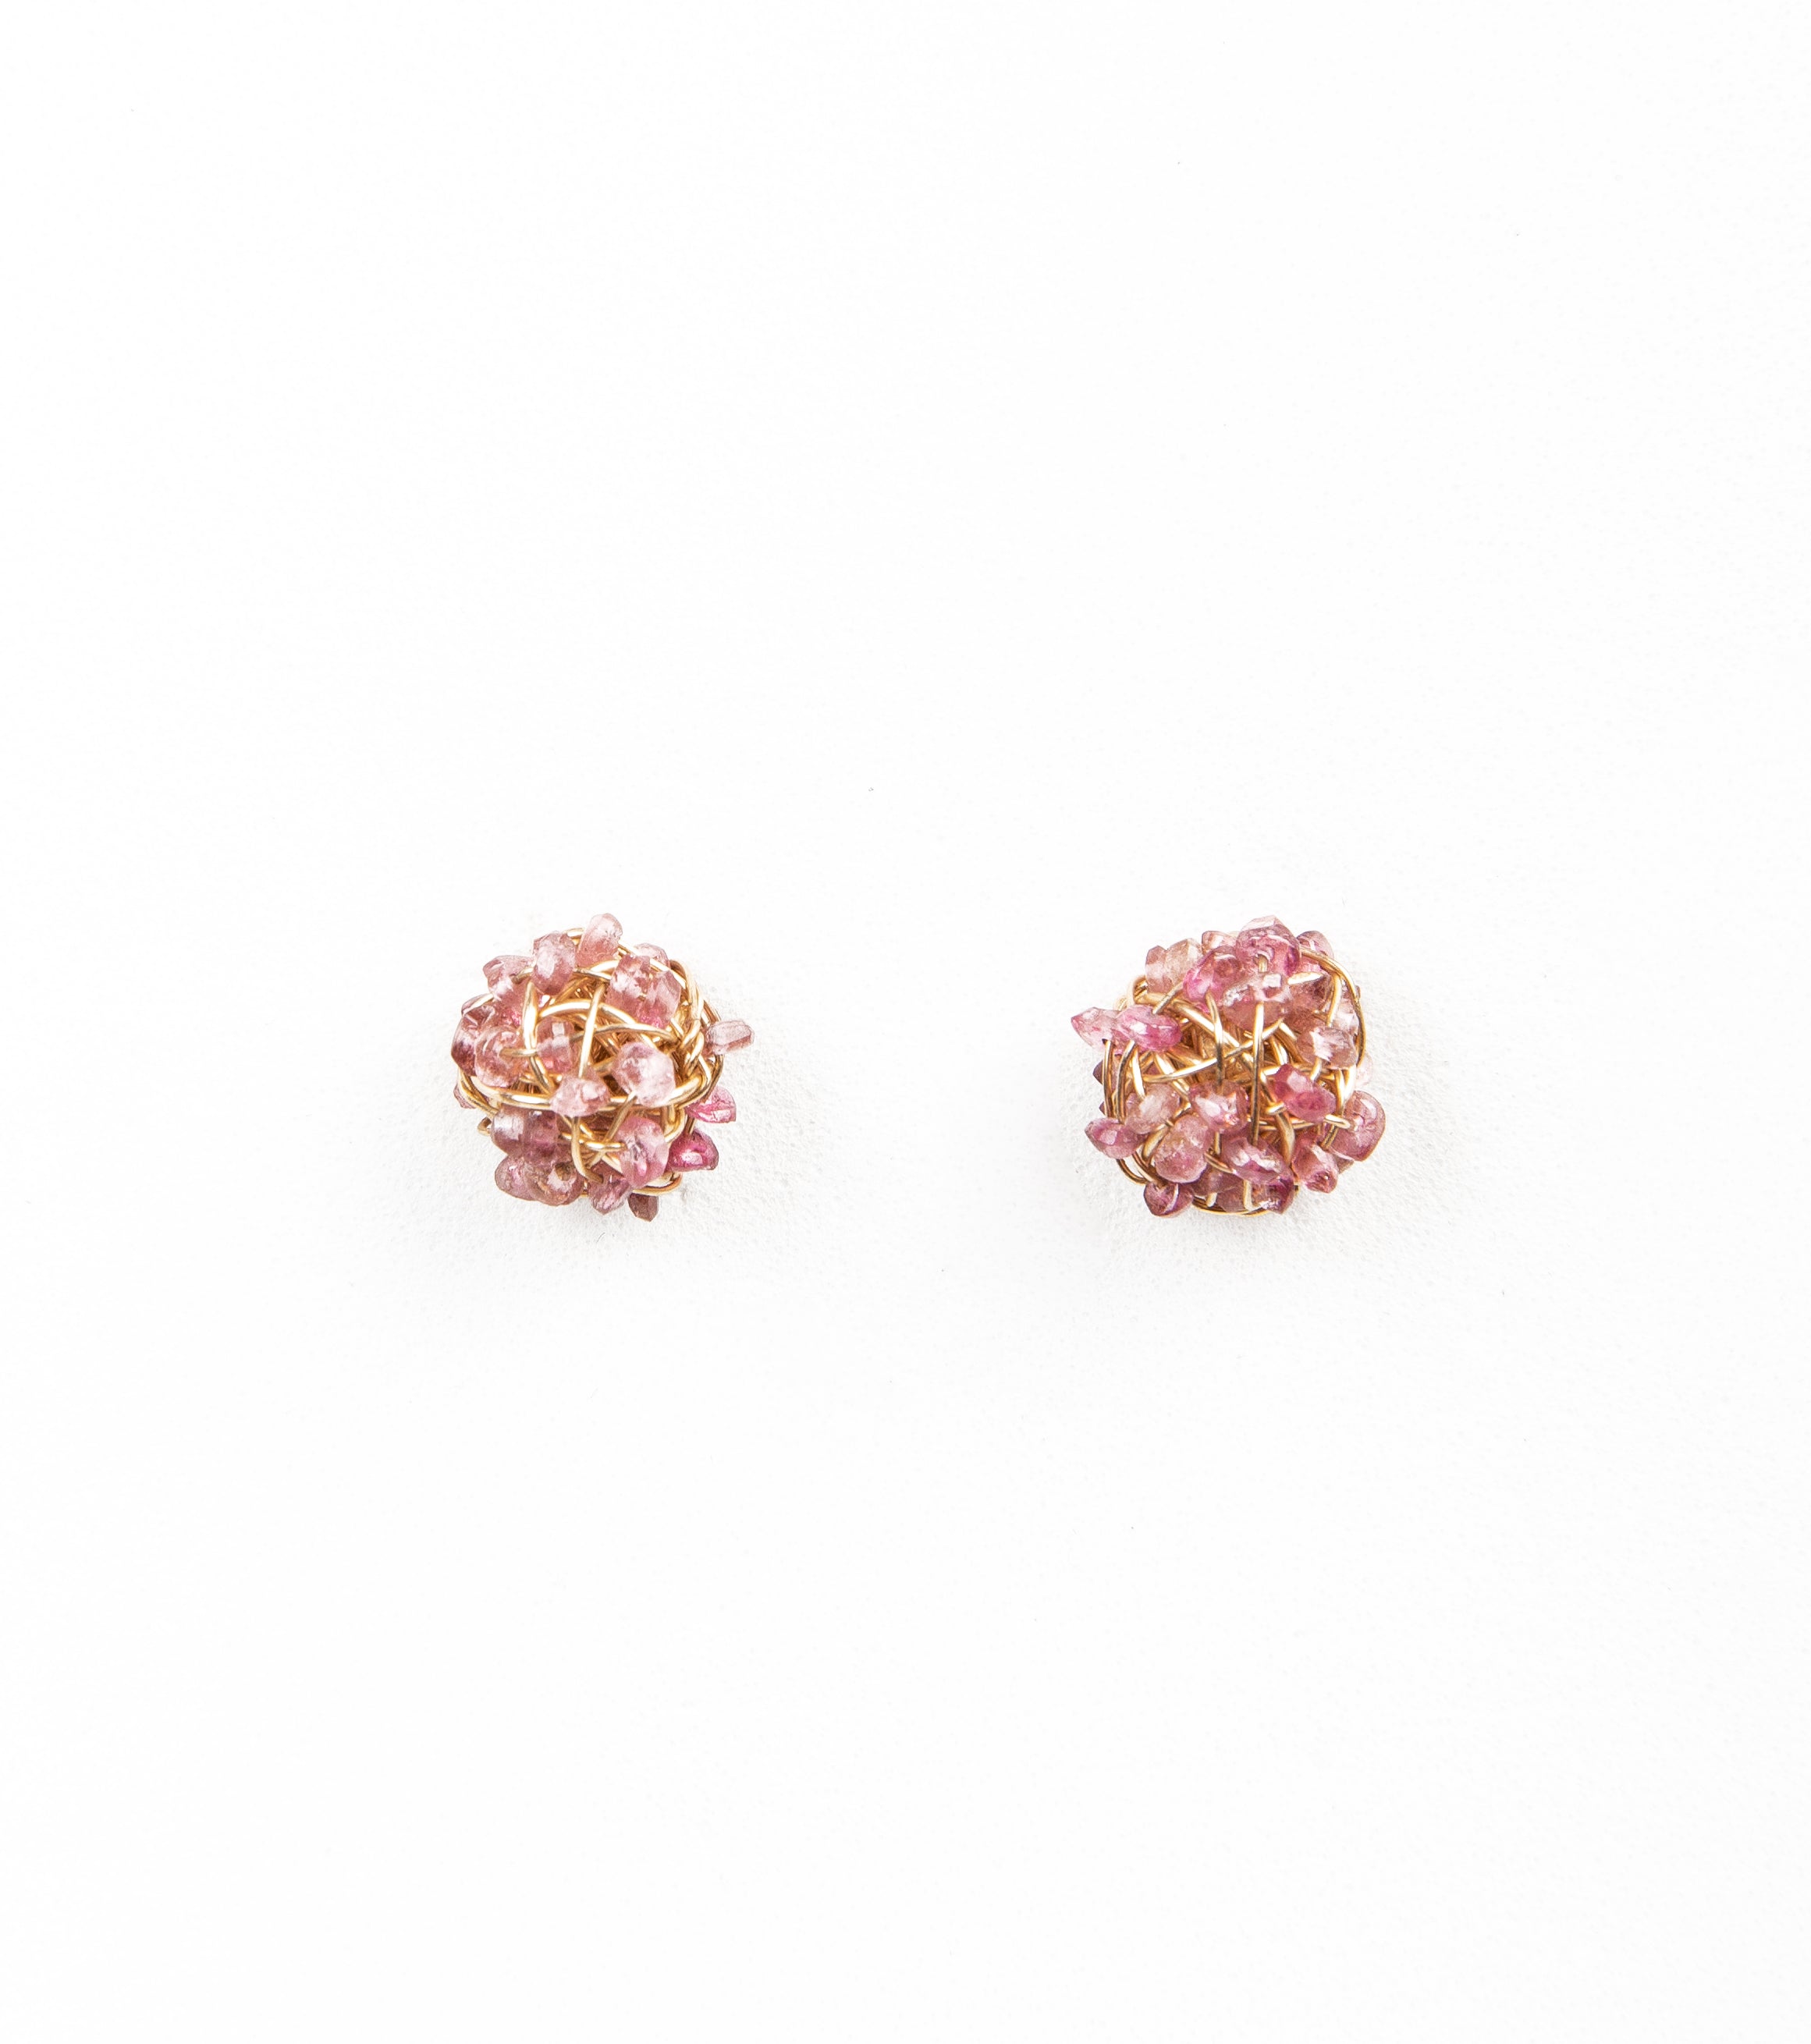 Clementina Stud Earrings #1 (9mm) - Mix Rosas Gems Earrings TARBAY   